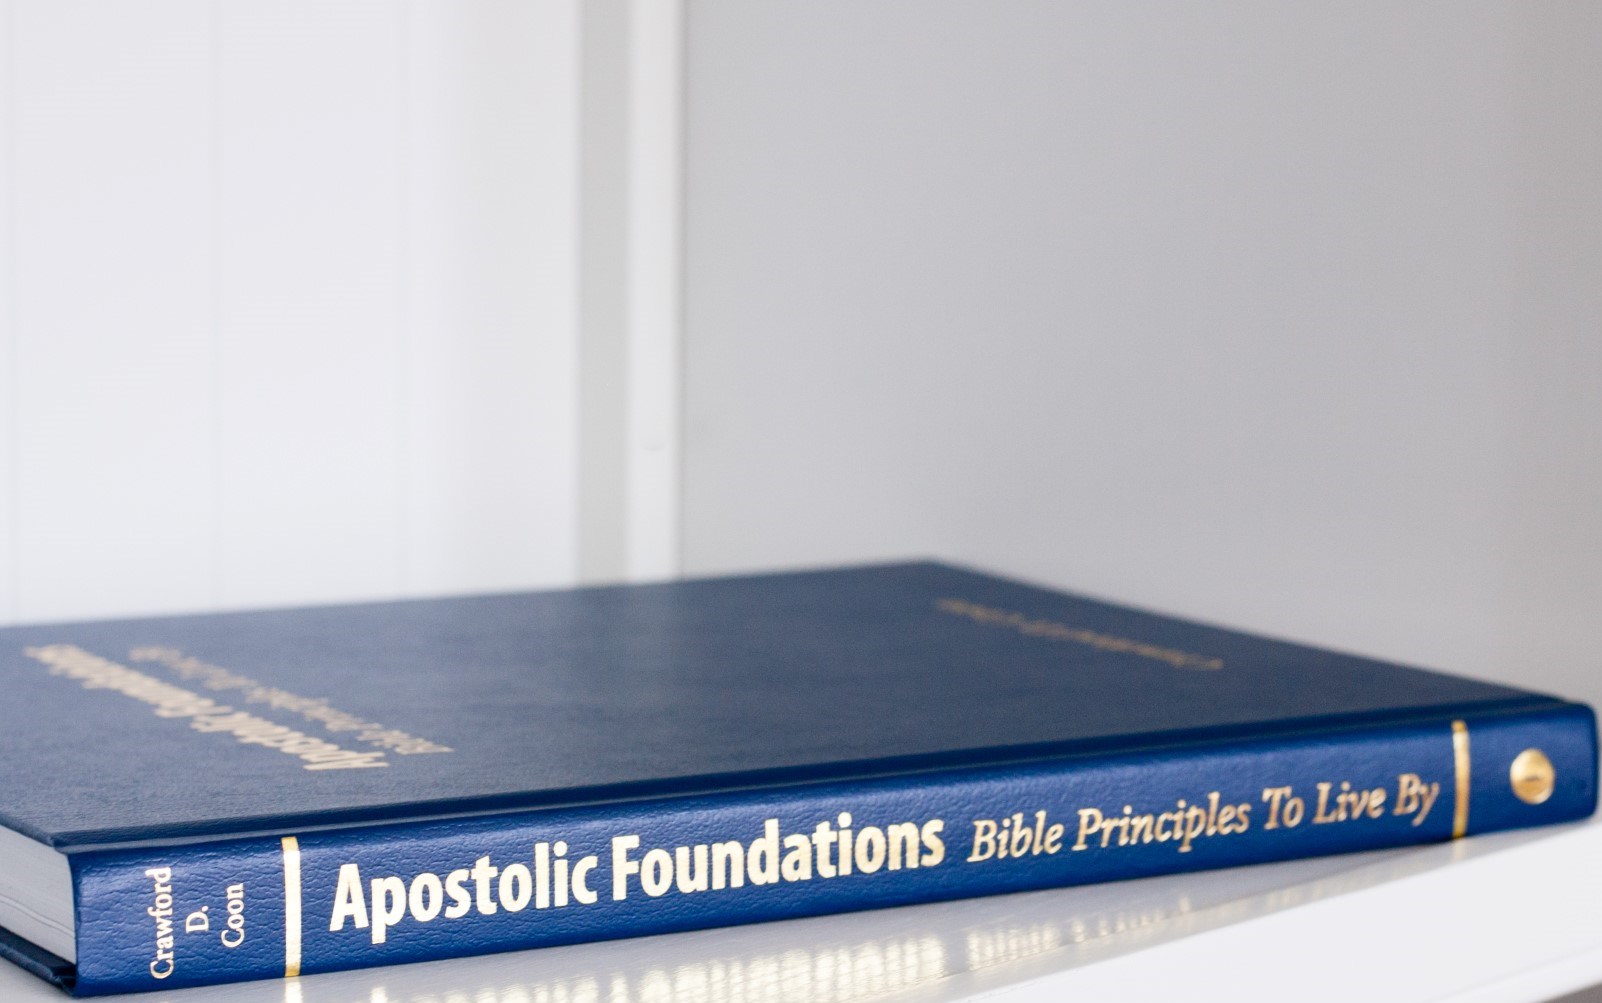 Apostolic Foundations (case box) - Crawford Coon